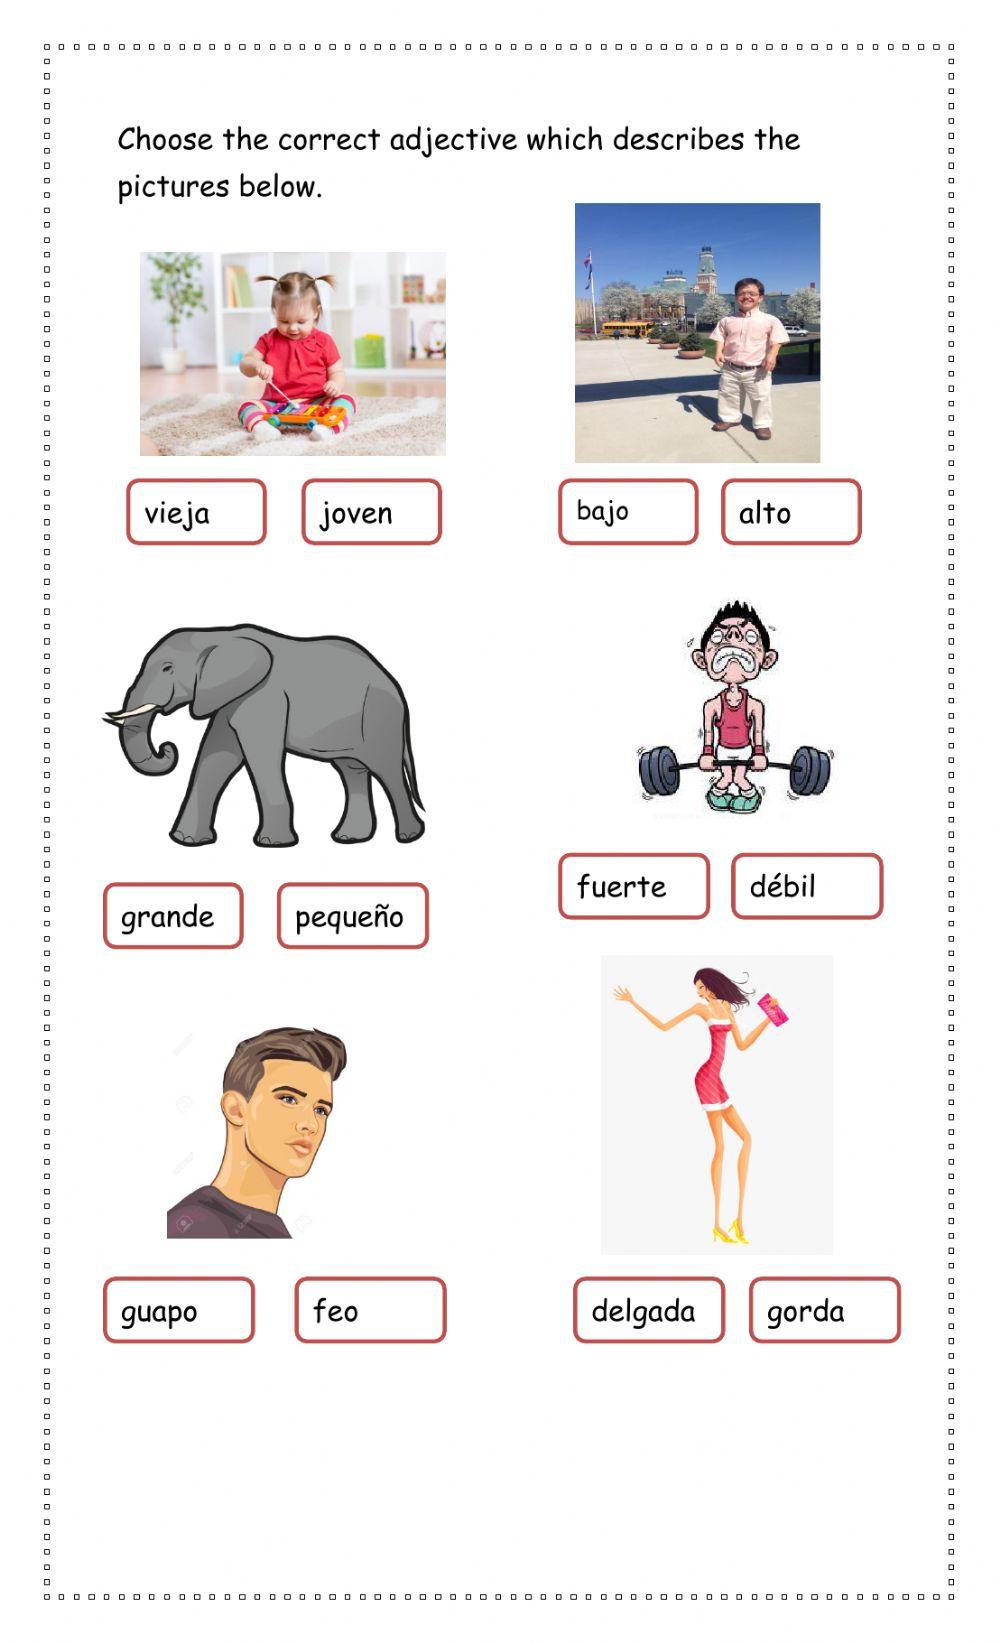 Spanish adjectives